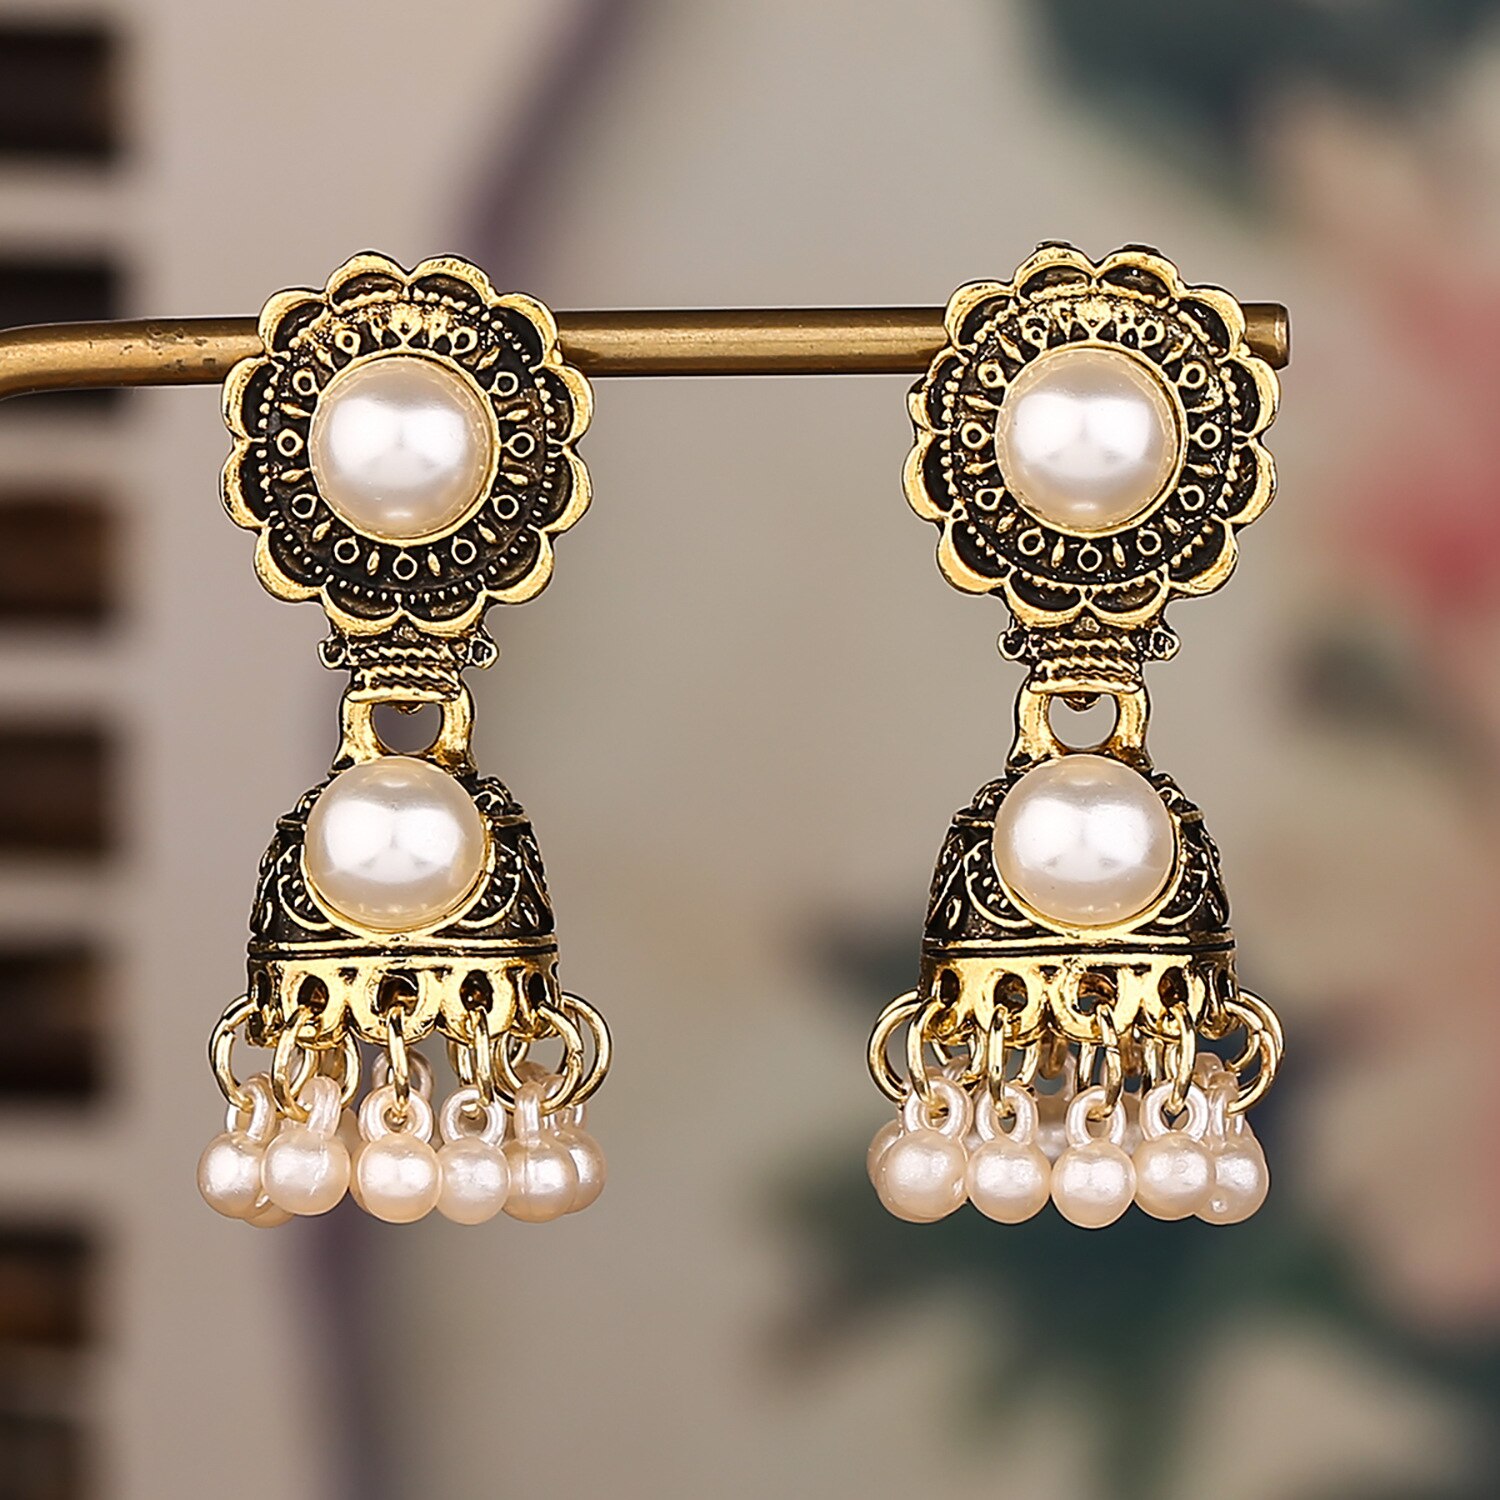 Ethnic-Gold-Color-Flower-Indian-Earrings-For-Women-Pendient-Vintage-Gyspy-Pearl-Ladies-Earring-Jewel-1005003740449342-4